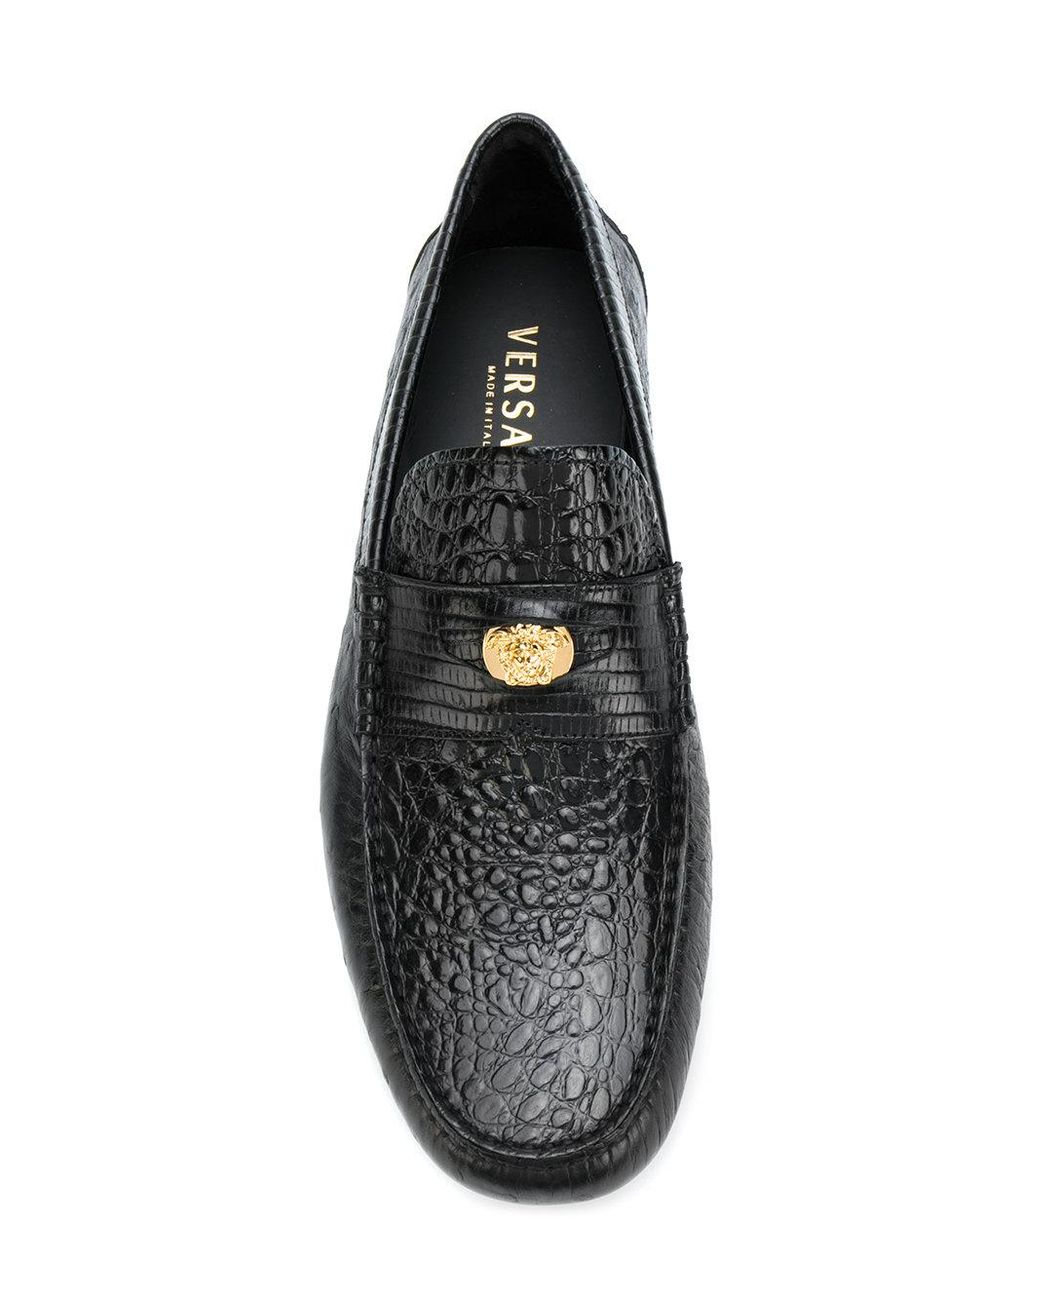 Versace Men's Dark Brown Croc Print Leather Moccasins Driving Shoes